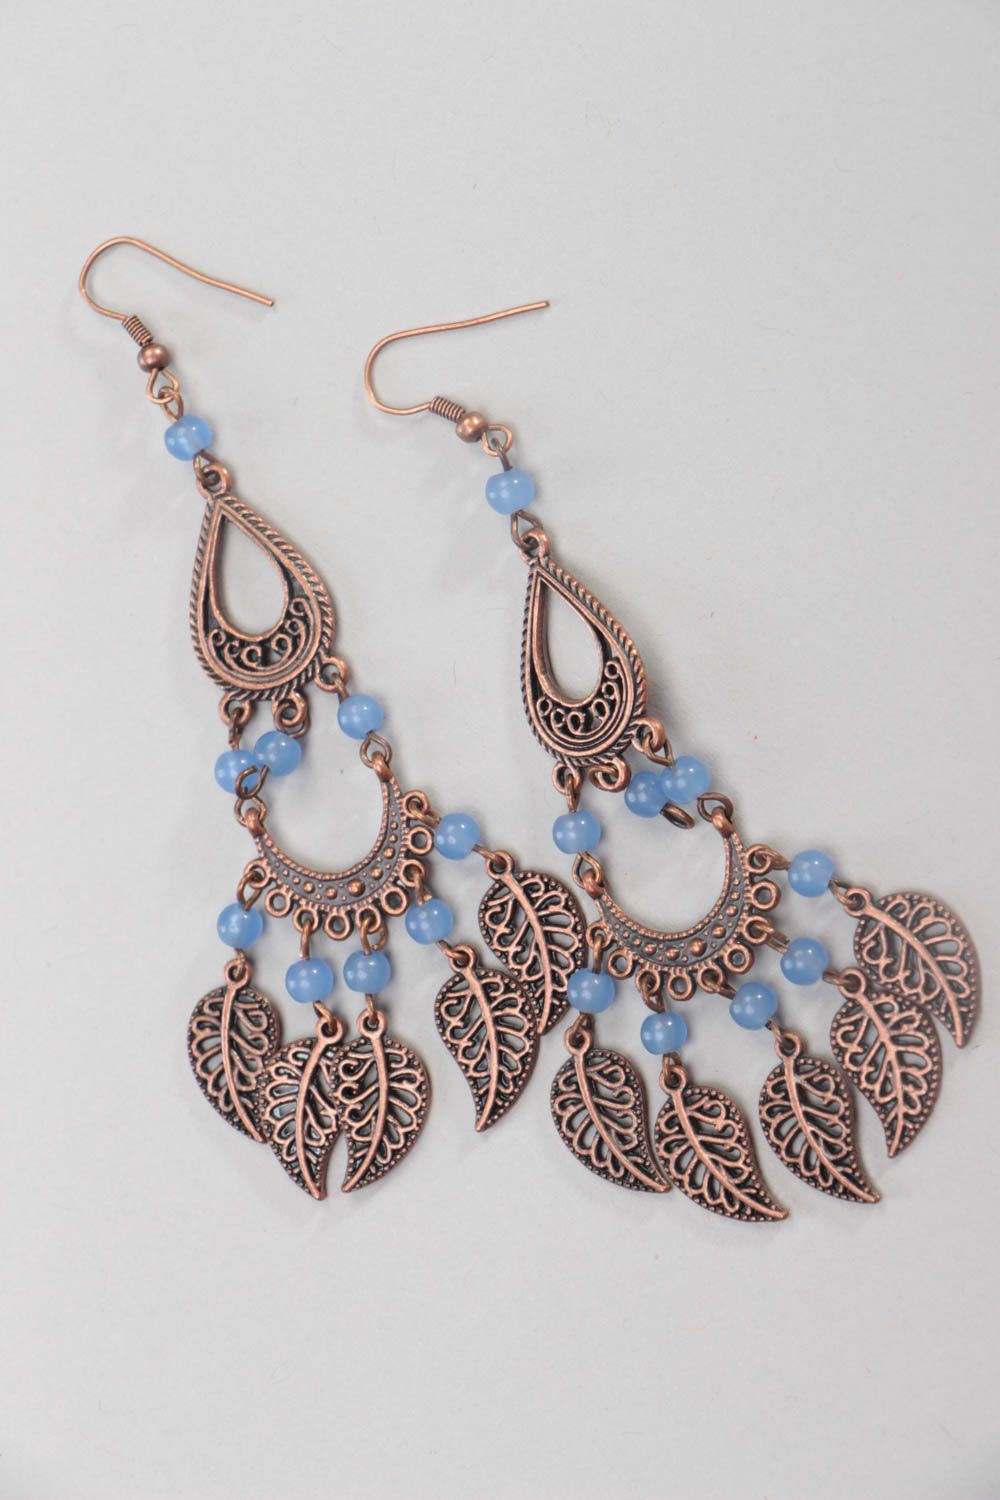 Handmade long earrings massive blue accessories jewelry made of glass beads photo 2